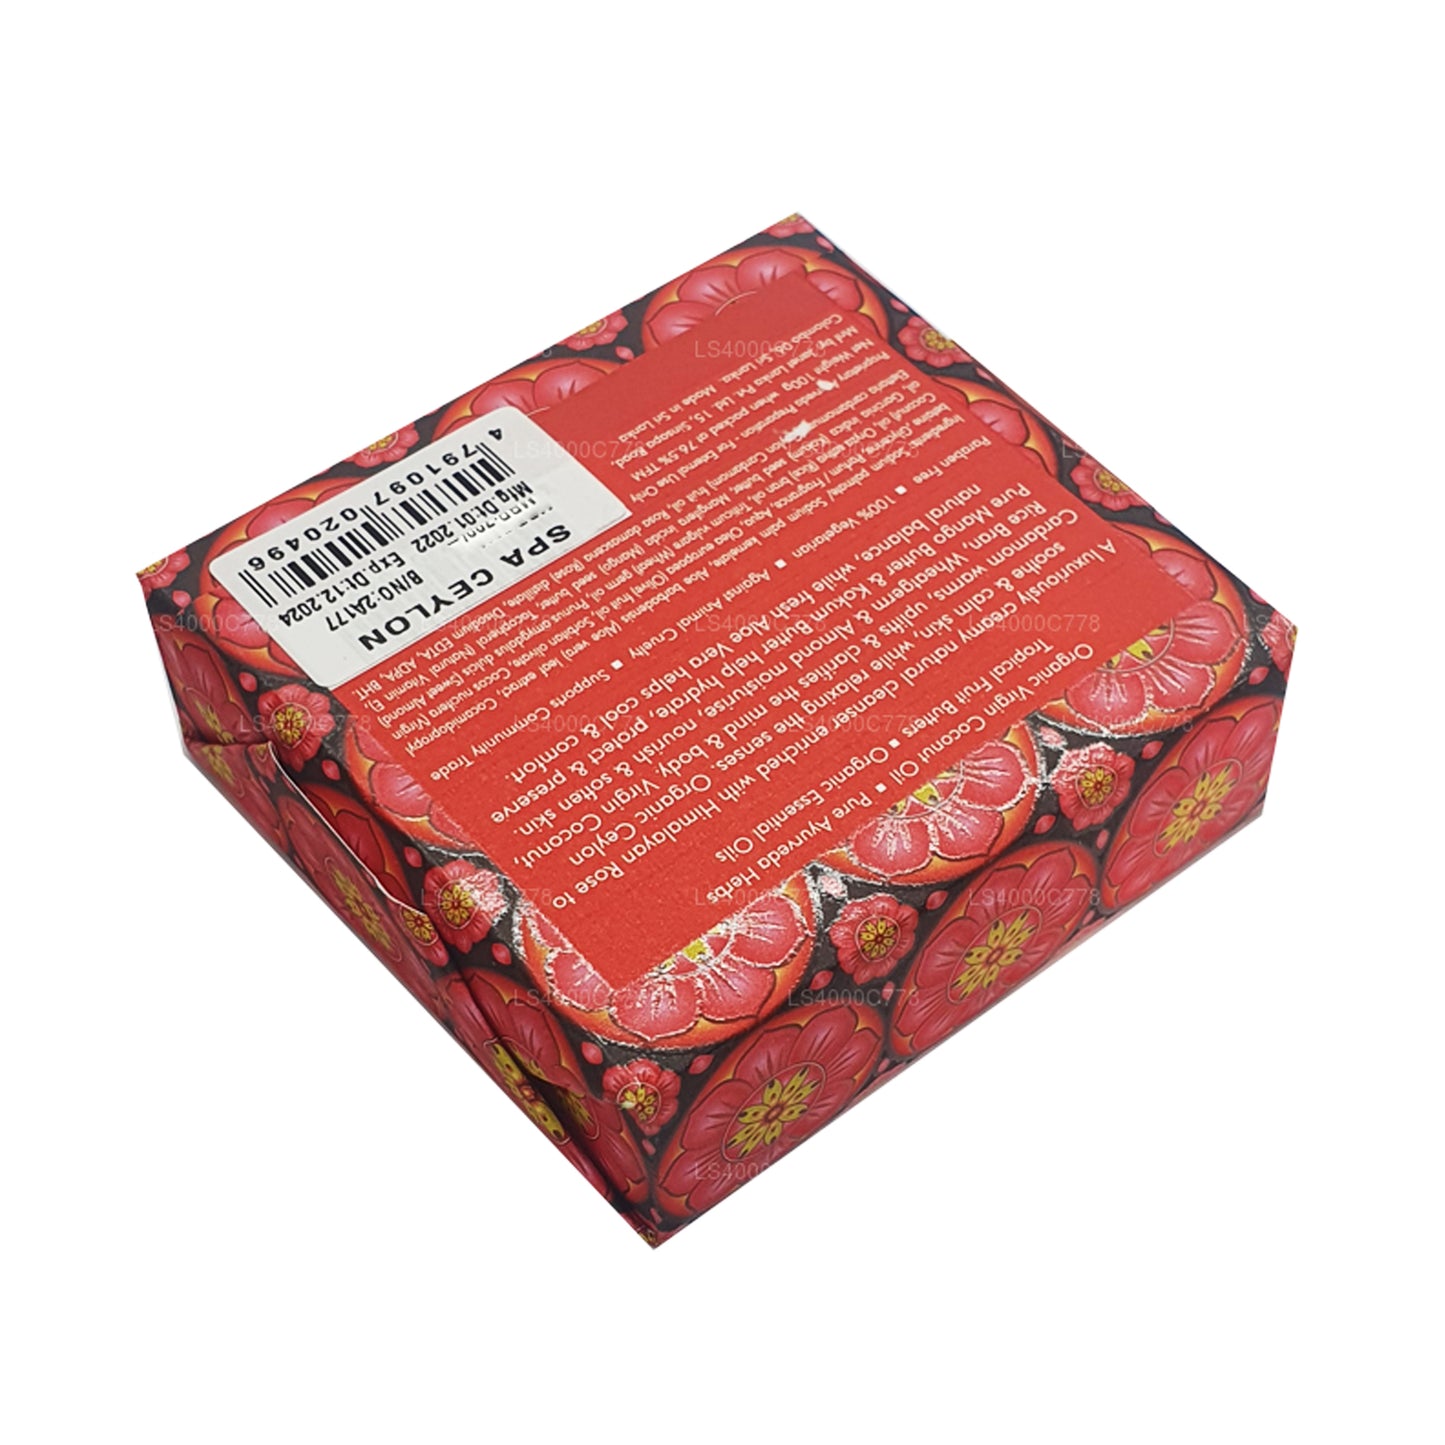 Spa Ceylon Cardamom Rose Luxury Soap (100g)